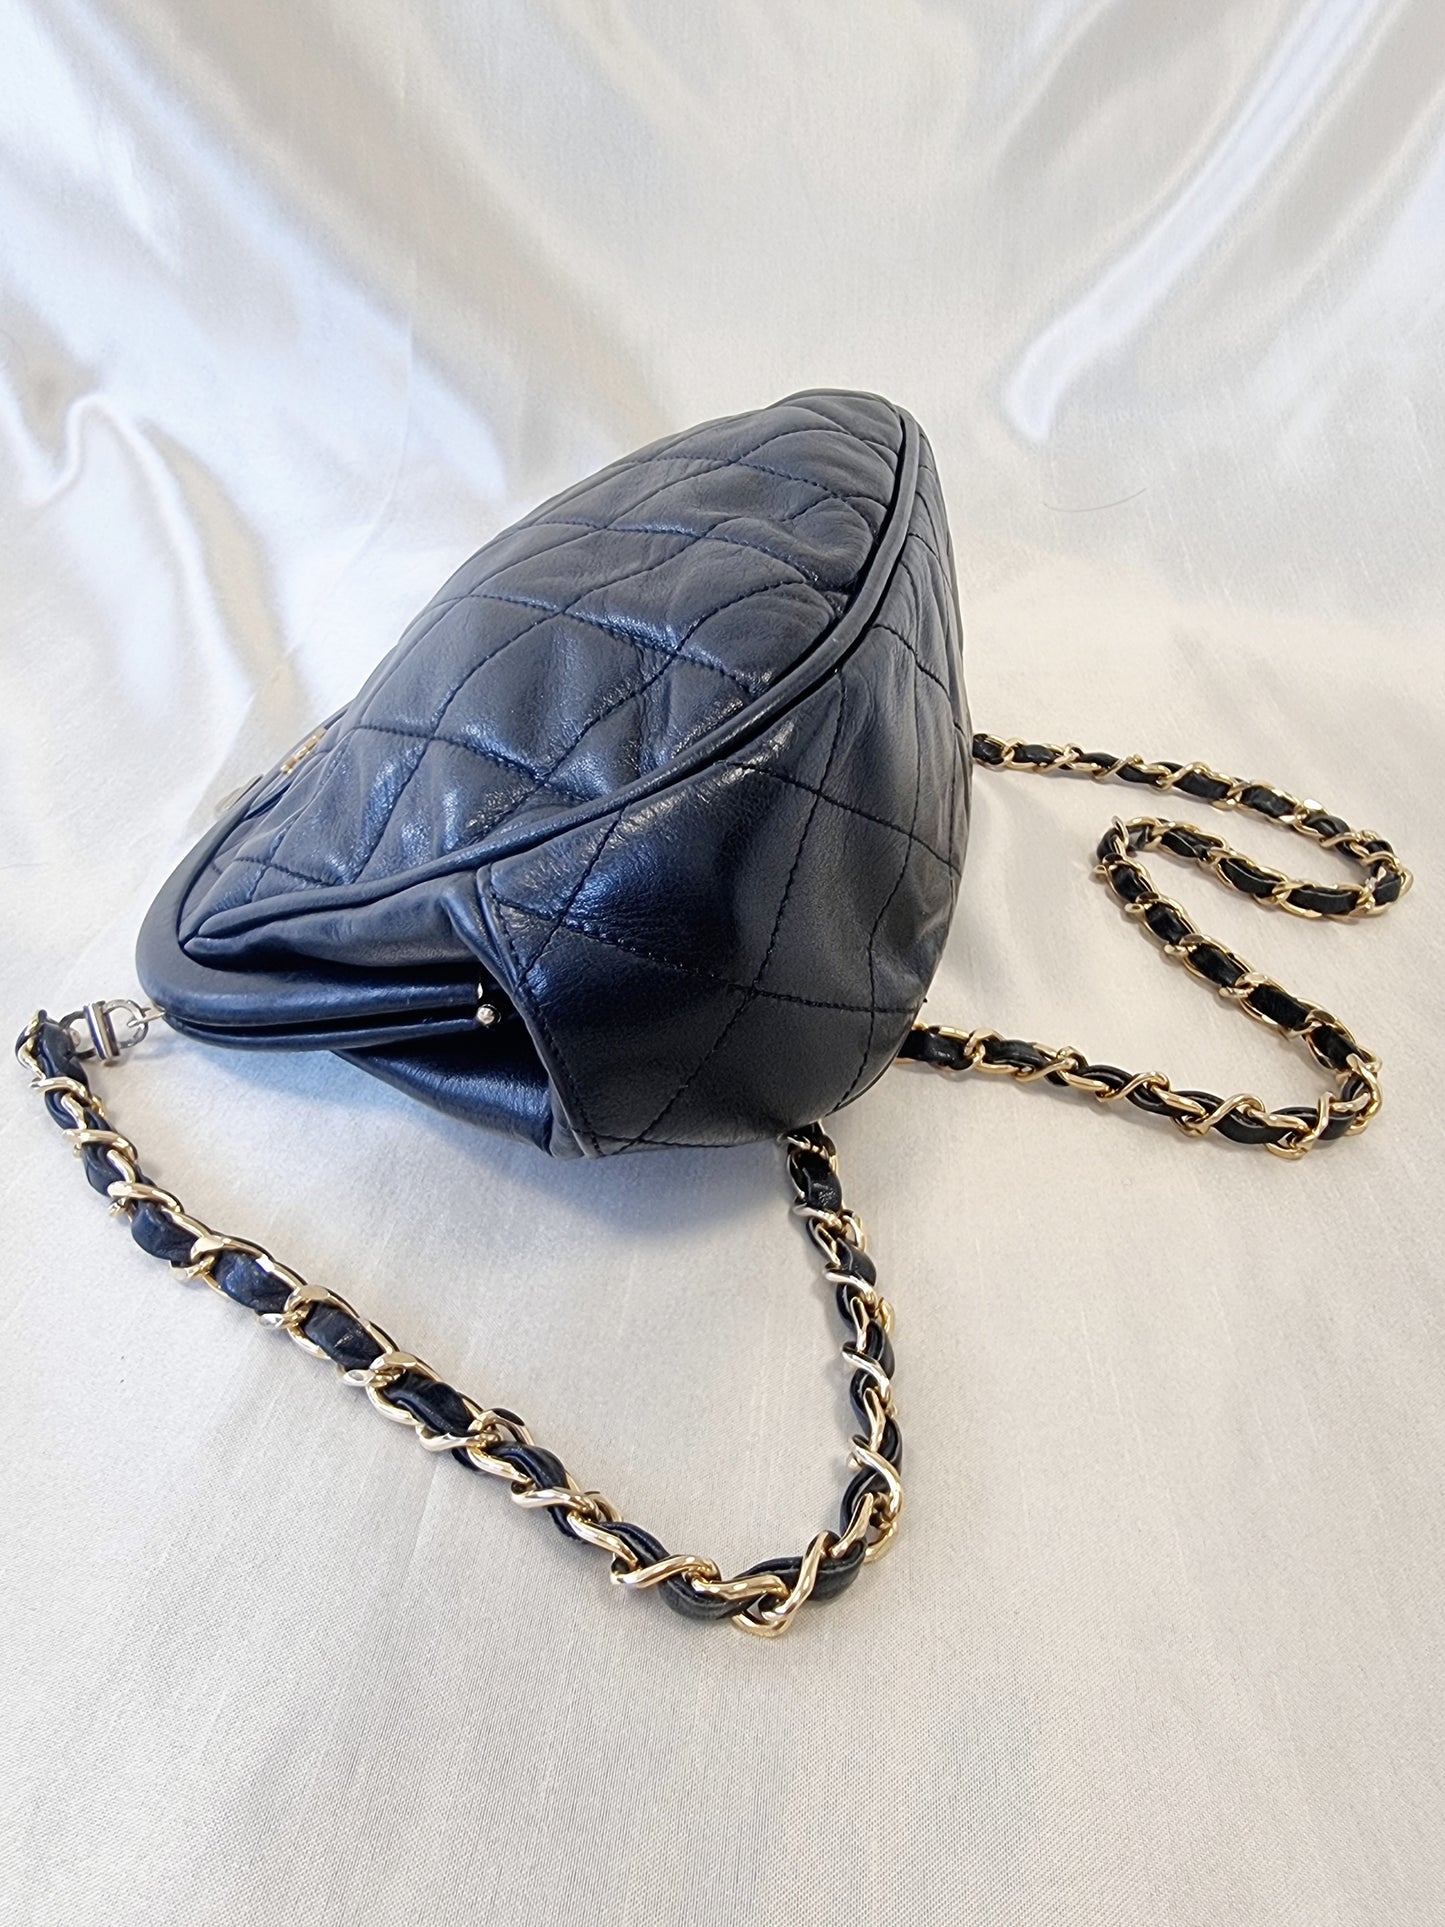 Chanel rare vintage clasp purse